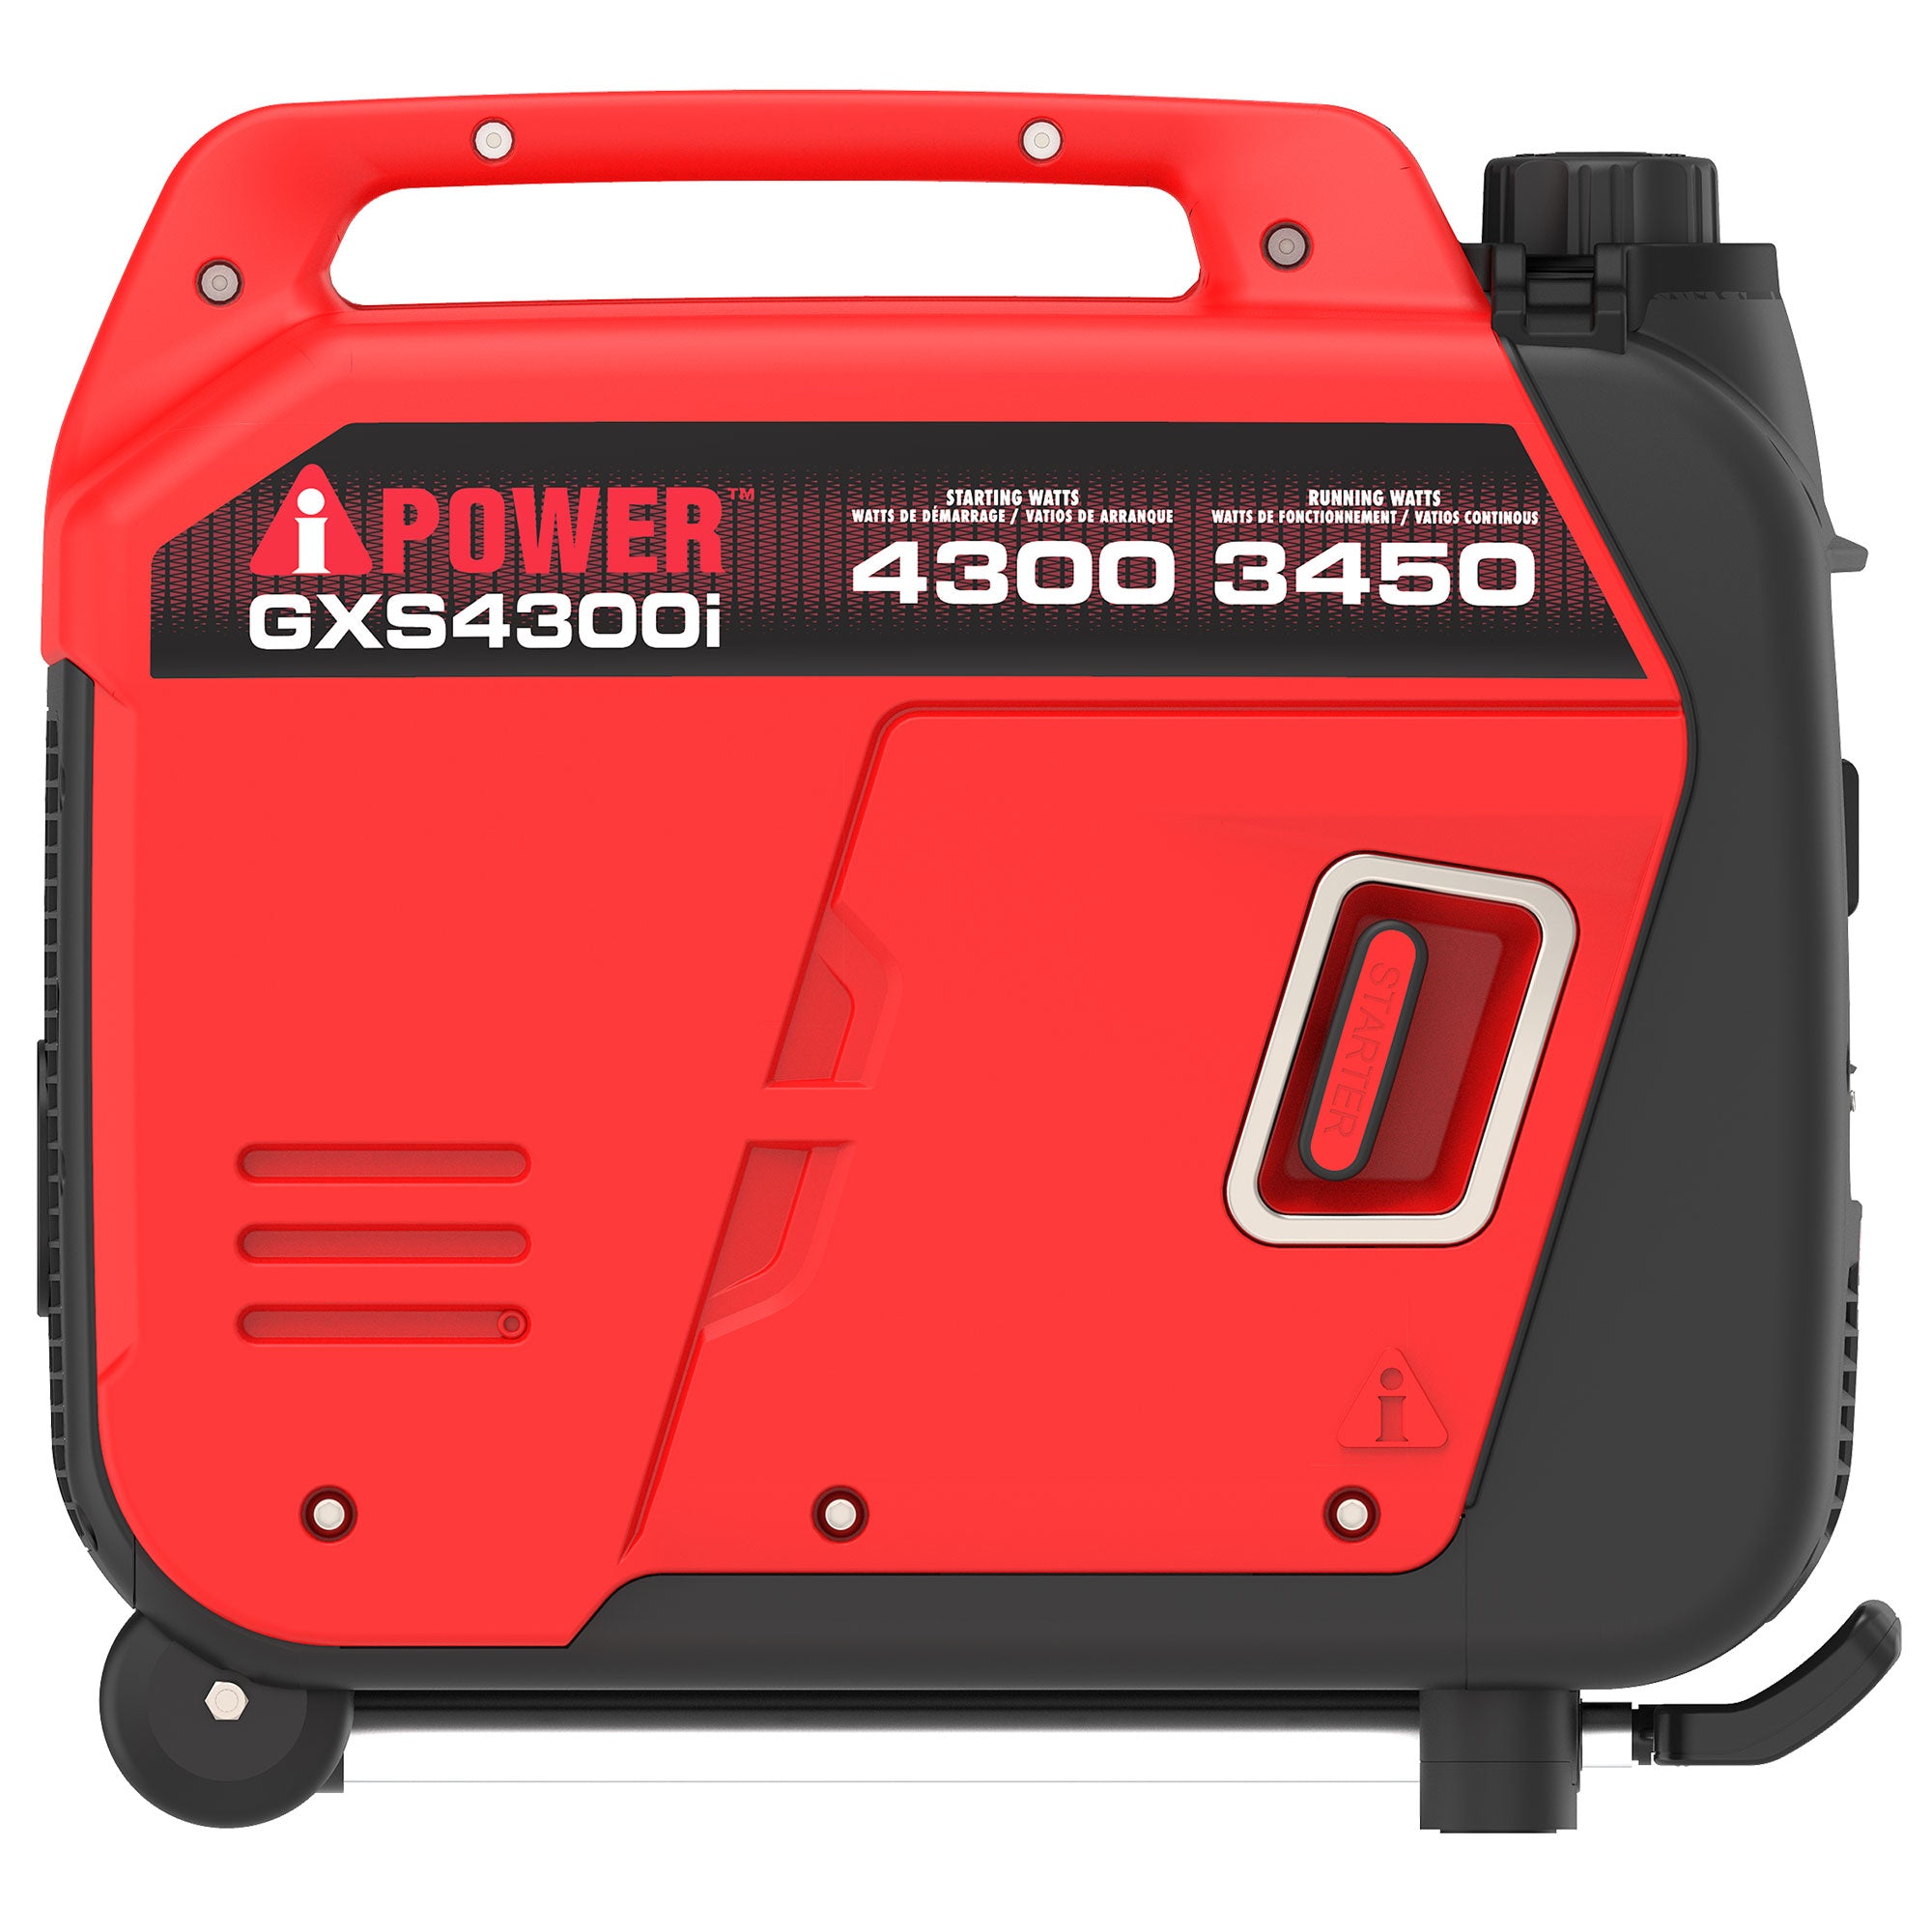 GXS4300i 4300 Watt Inverter Generator